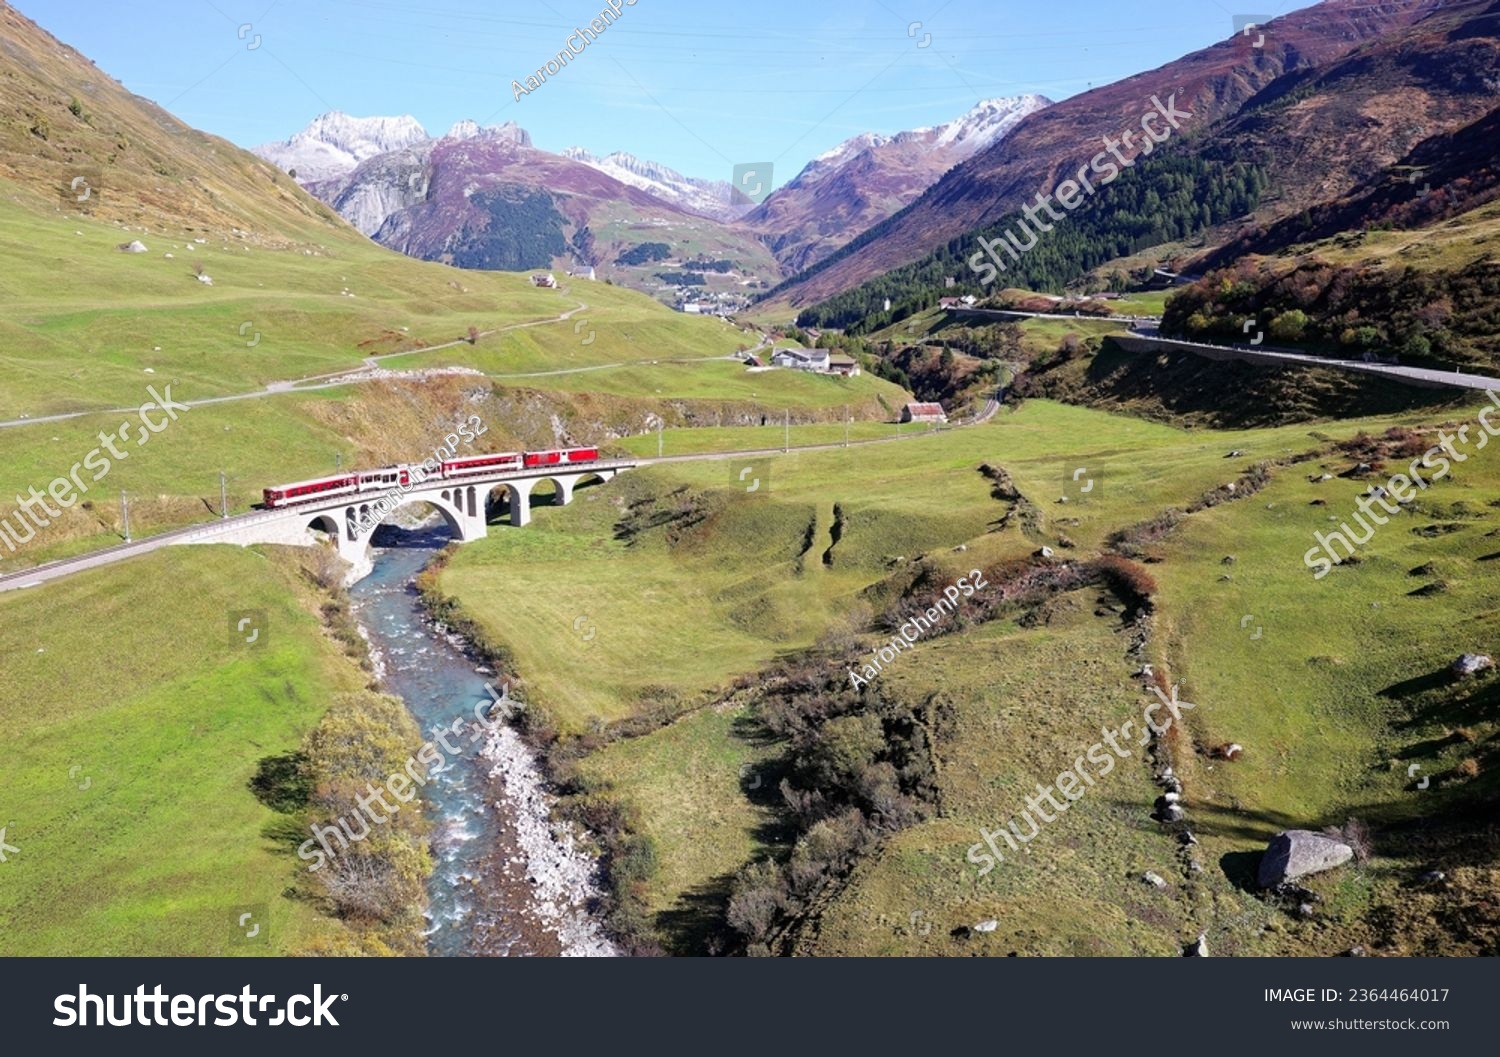 A train of Matterhorn Gotthard Bahn travels across a viaduct over a stream in the green valley between alpine mountains on a beautiful sunny day, in Hospental village near Andermatt, Uri, Switzerland #2364464017